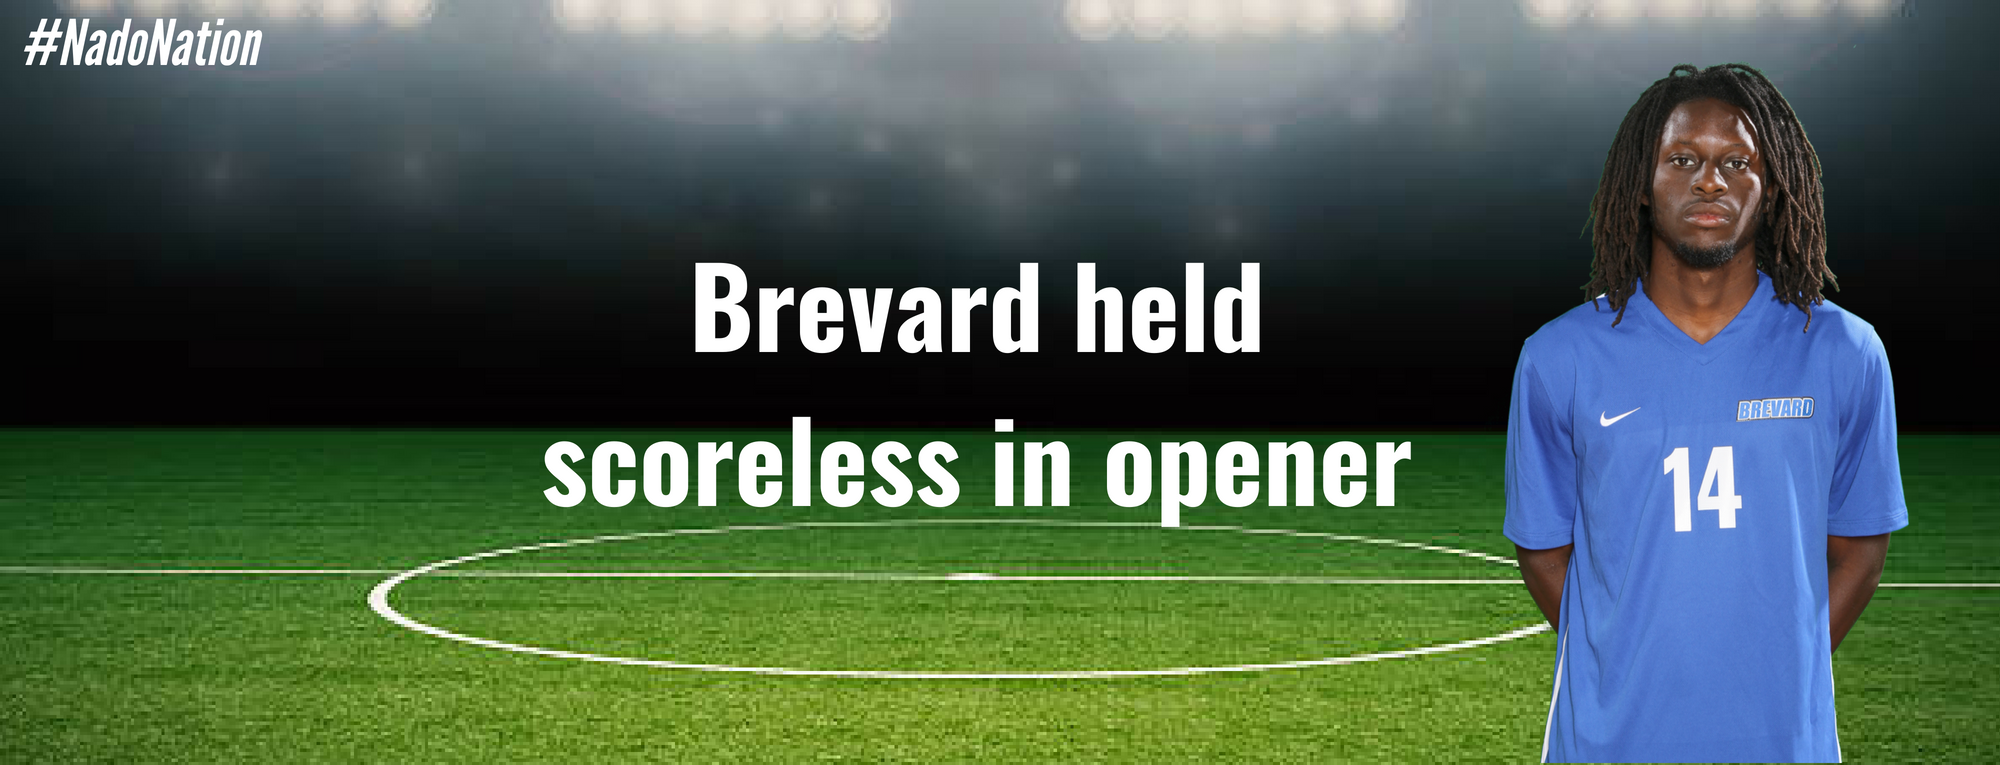 Brevard Men’s Soccer held scoreless in opener